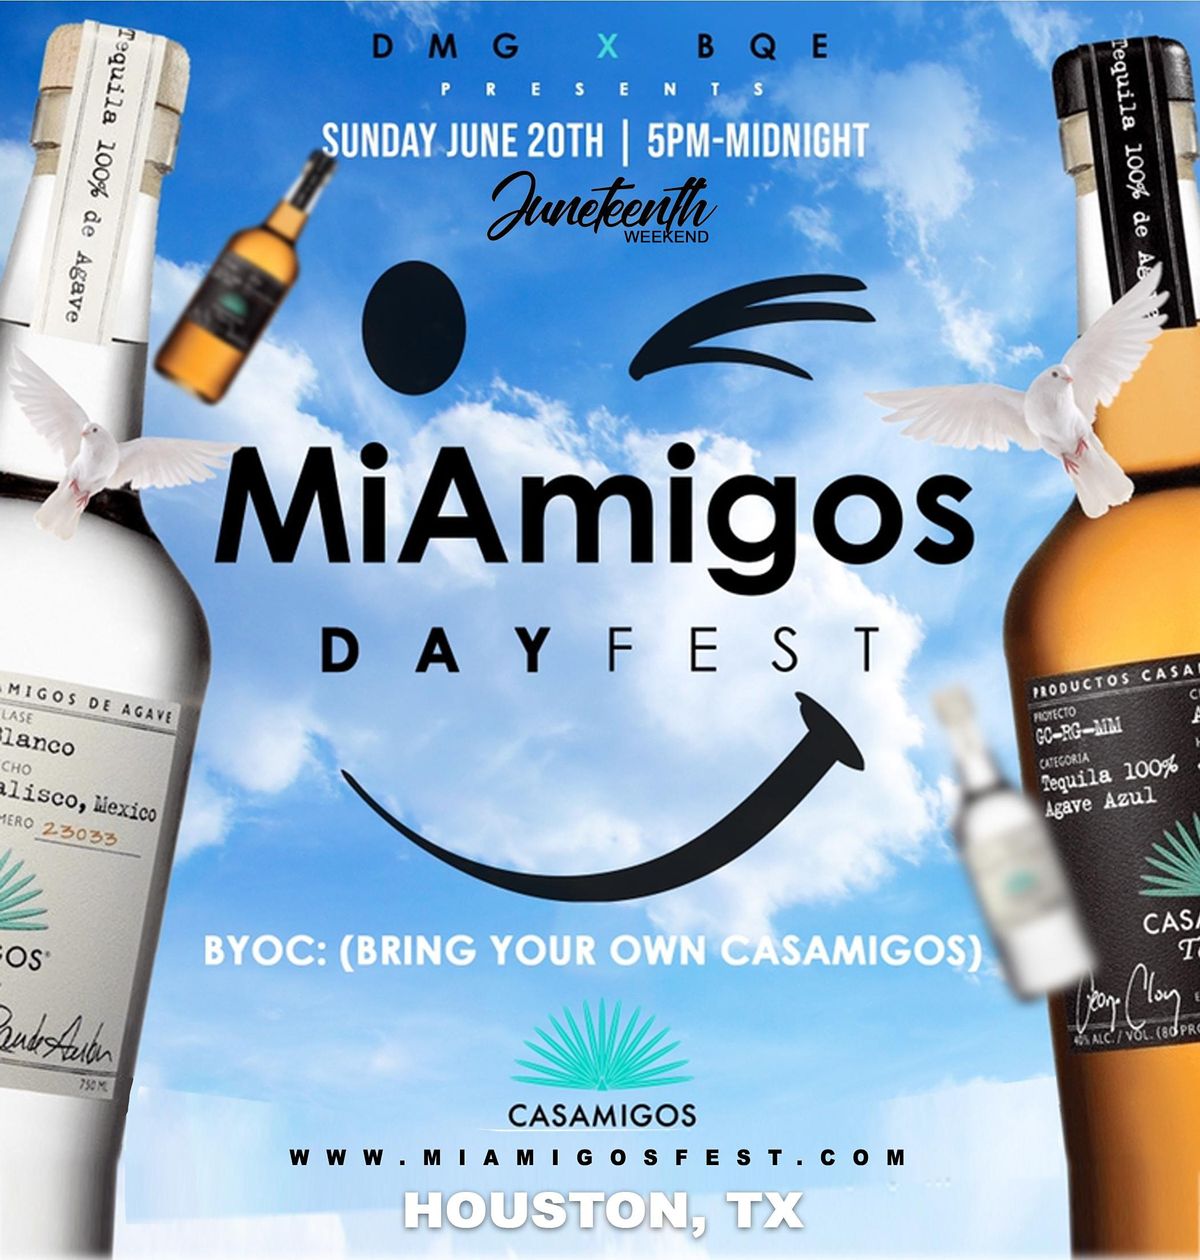 #MiAmigos DayFest | #BYOC Bring Your Own Casamigos | Dallas , TX